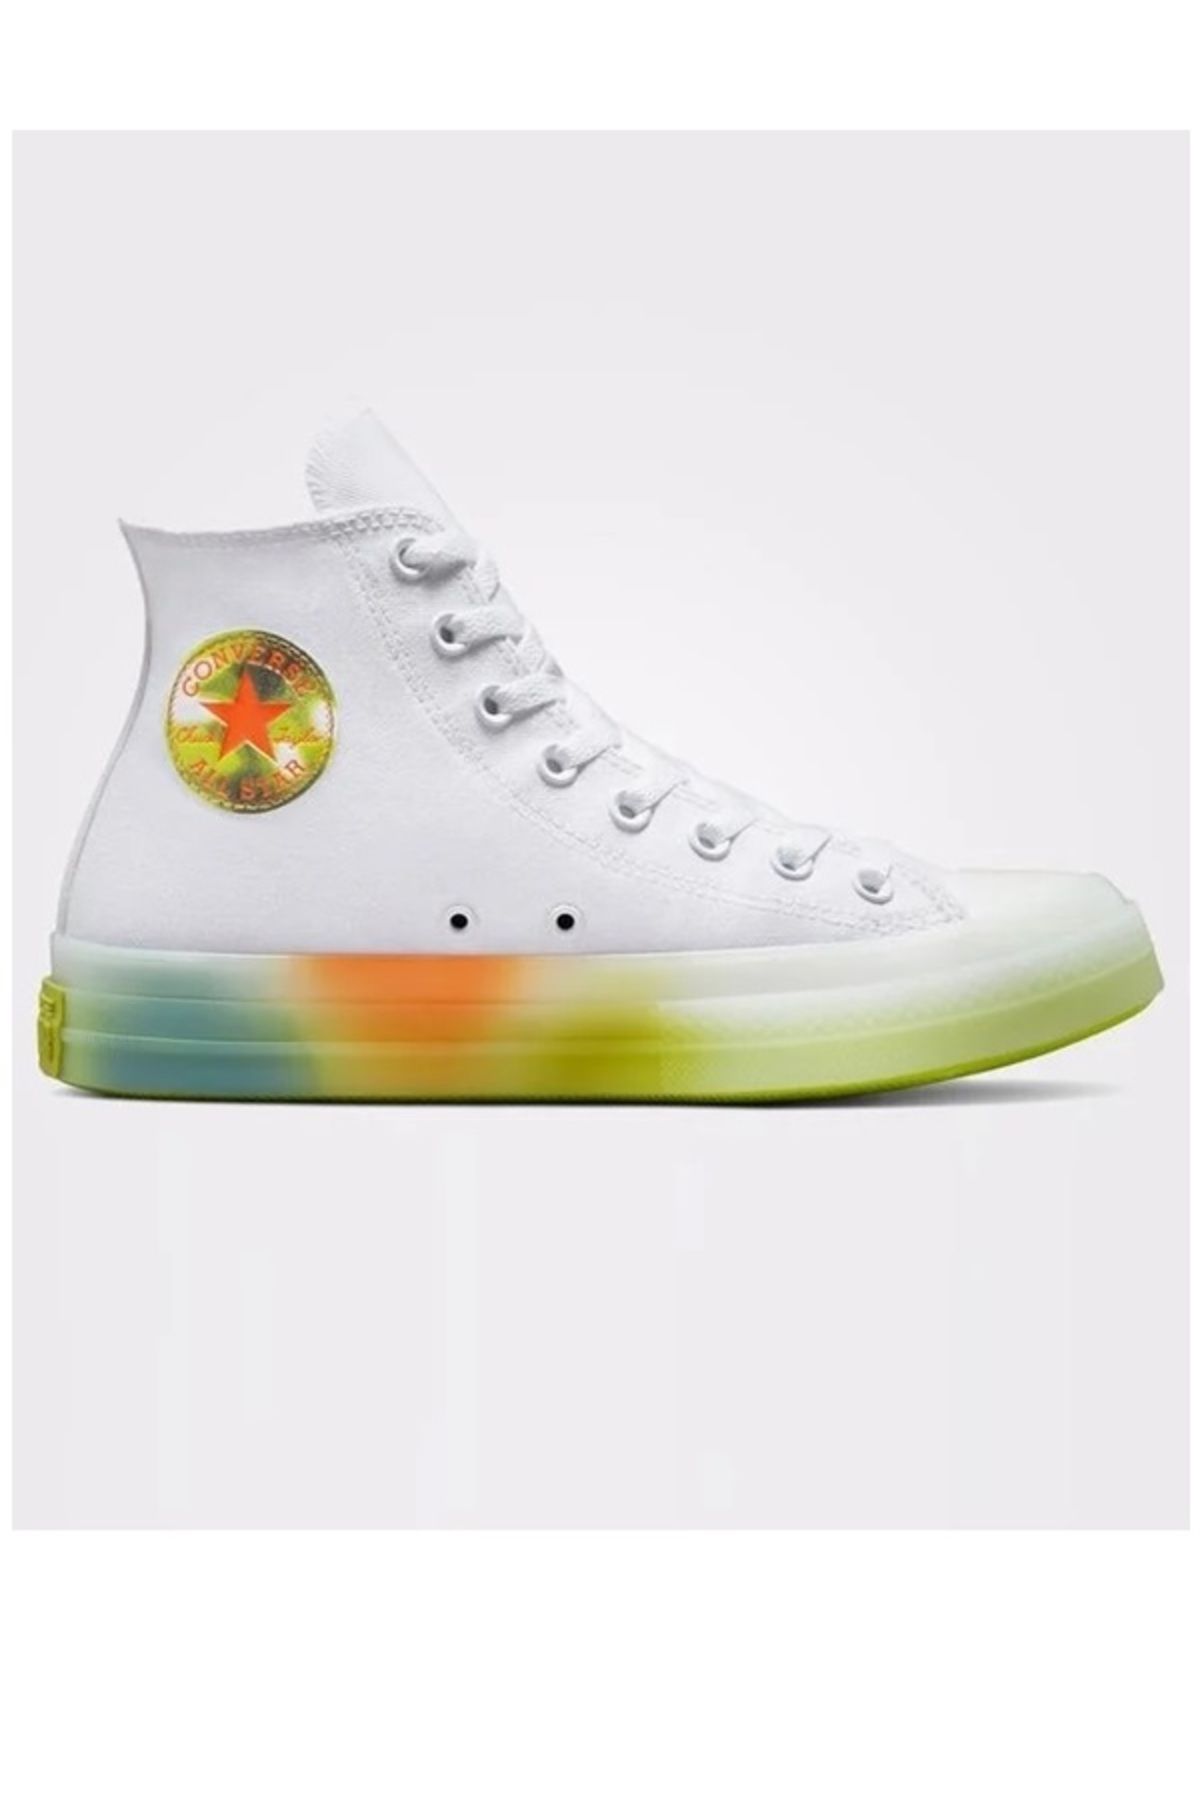 Converse Chuck Taylor All Star Cx Spray Paint Kadın Sneaker Ayakkabı